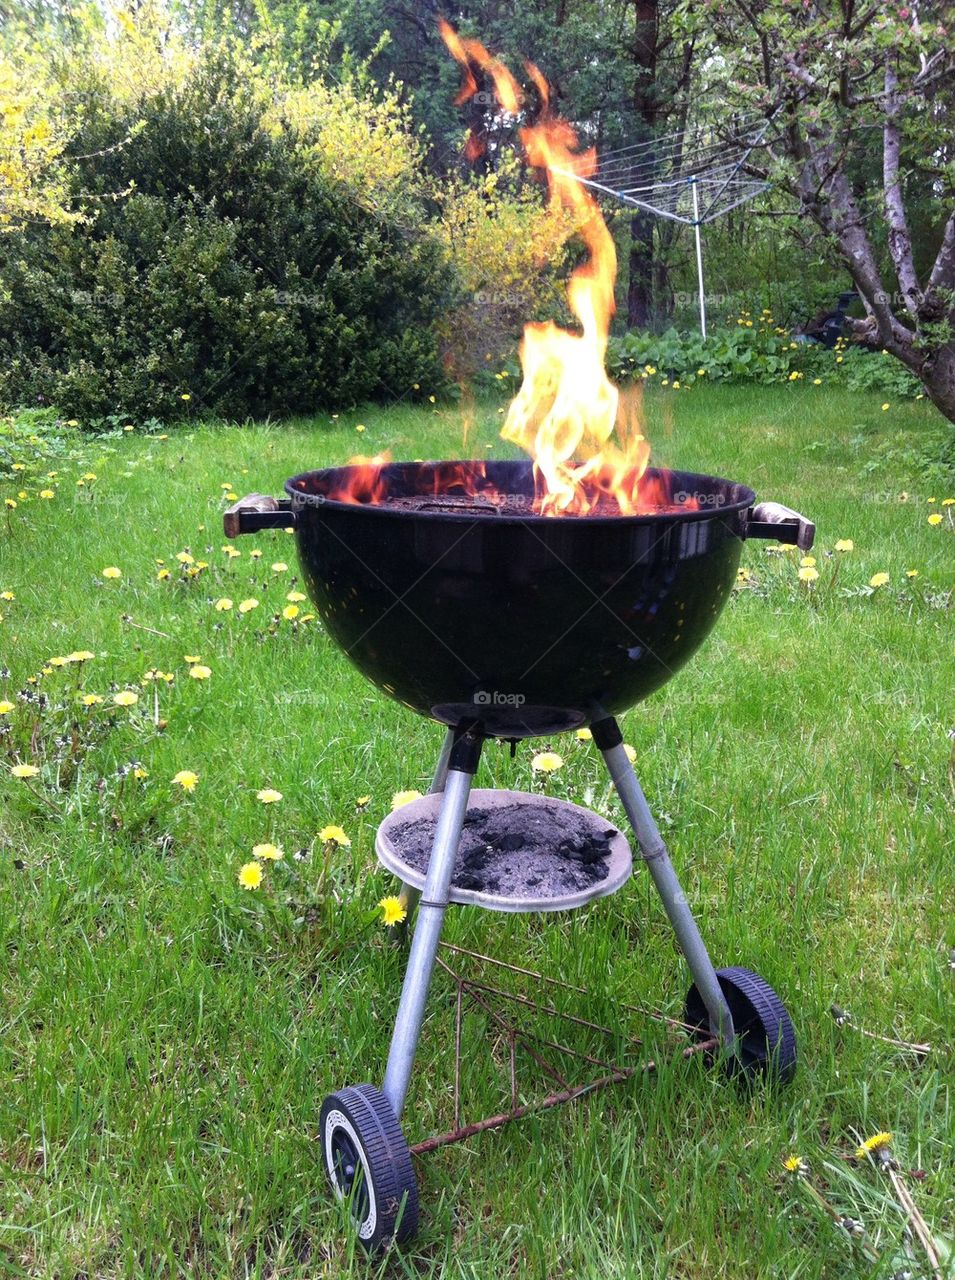 sweden cooking garden food by stenholm